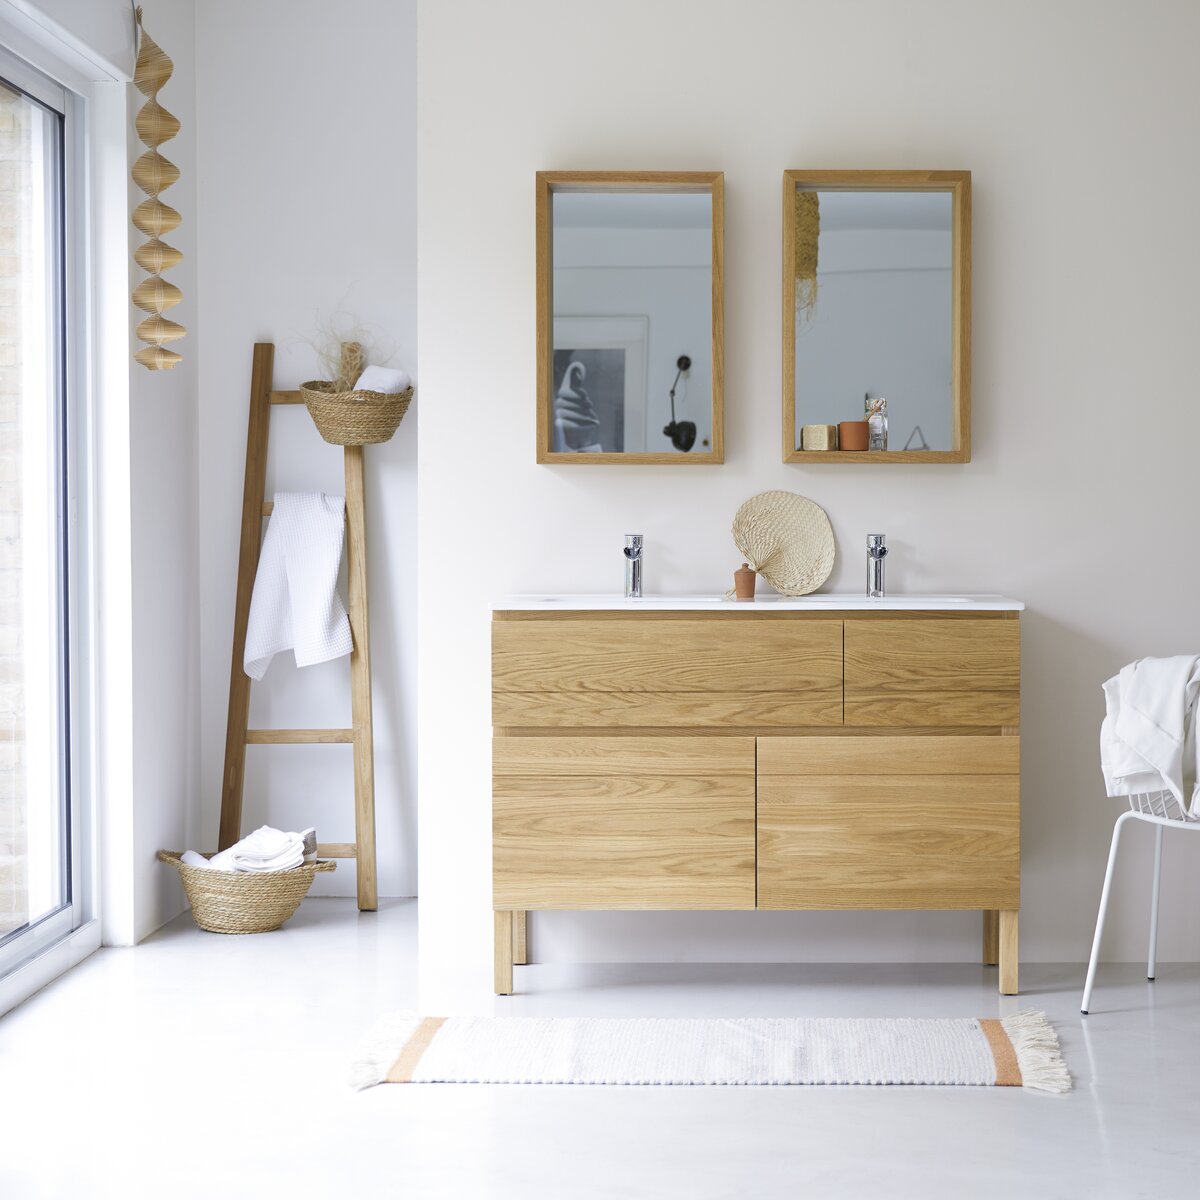 Solid oak and ceramic bathroom cabinet 120 cm - Bathroom / Bathroom ...